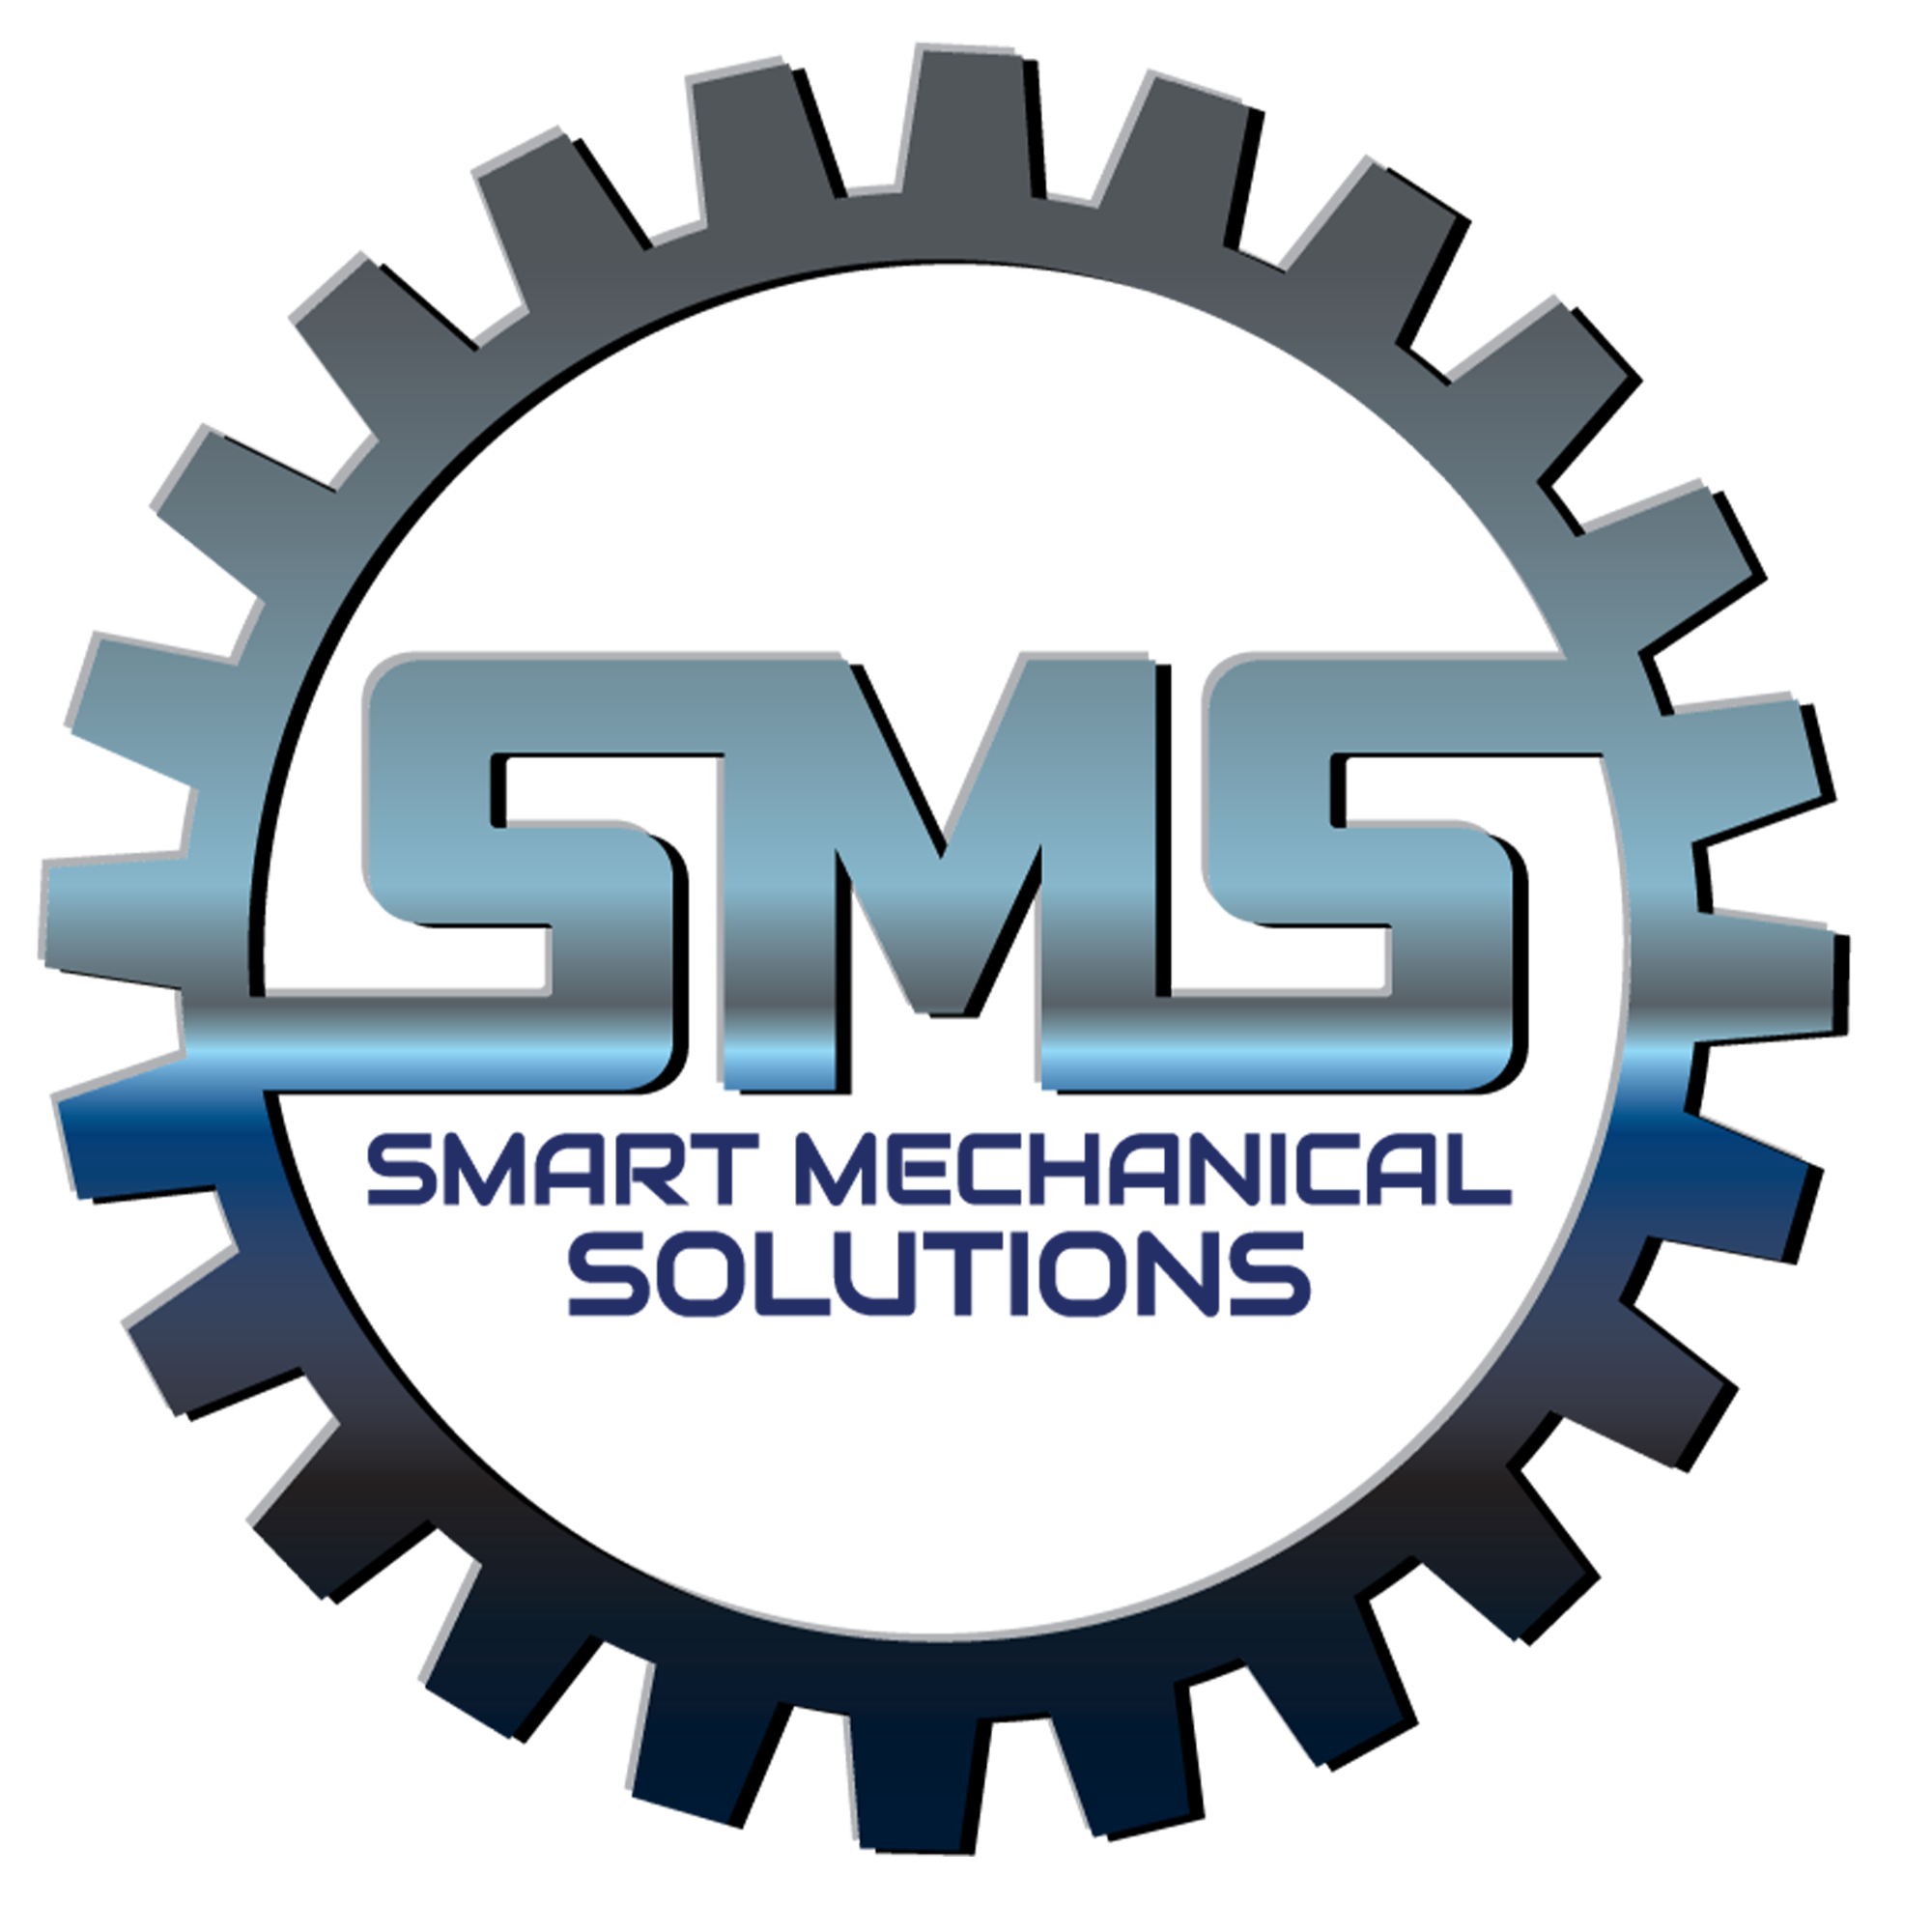 Smart Mechanical Solutions